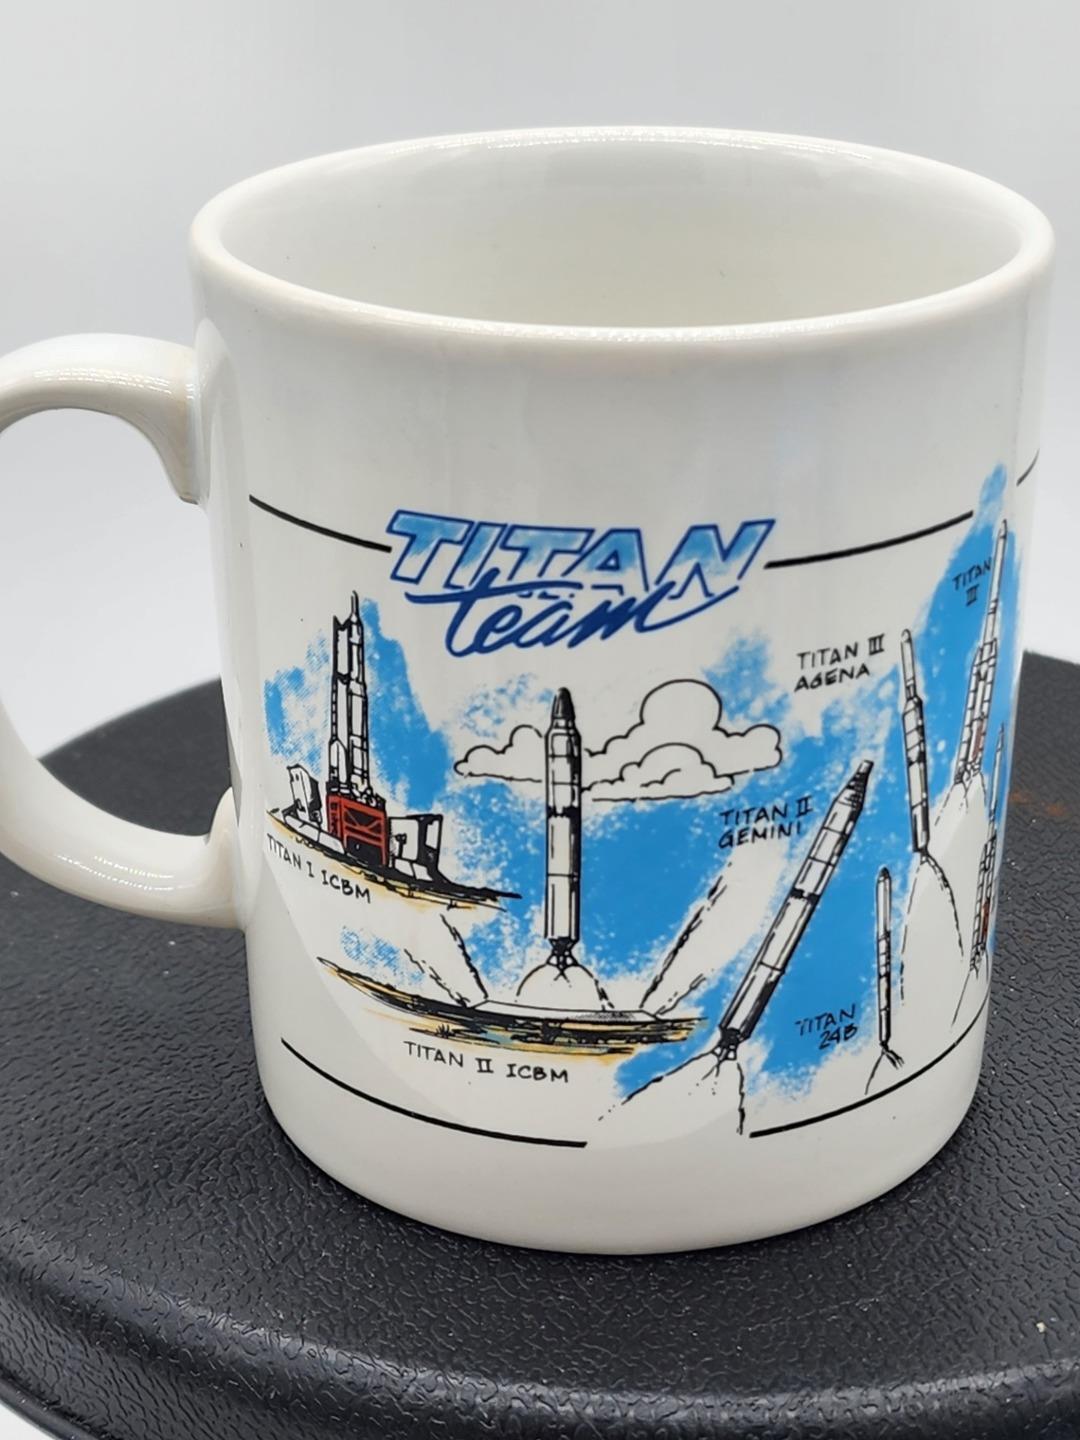 NASA Titan Team Lockheed Martin 30 Years Rocker Coloroll England Coffee Mug